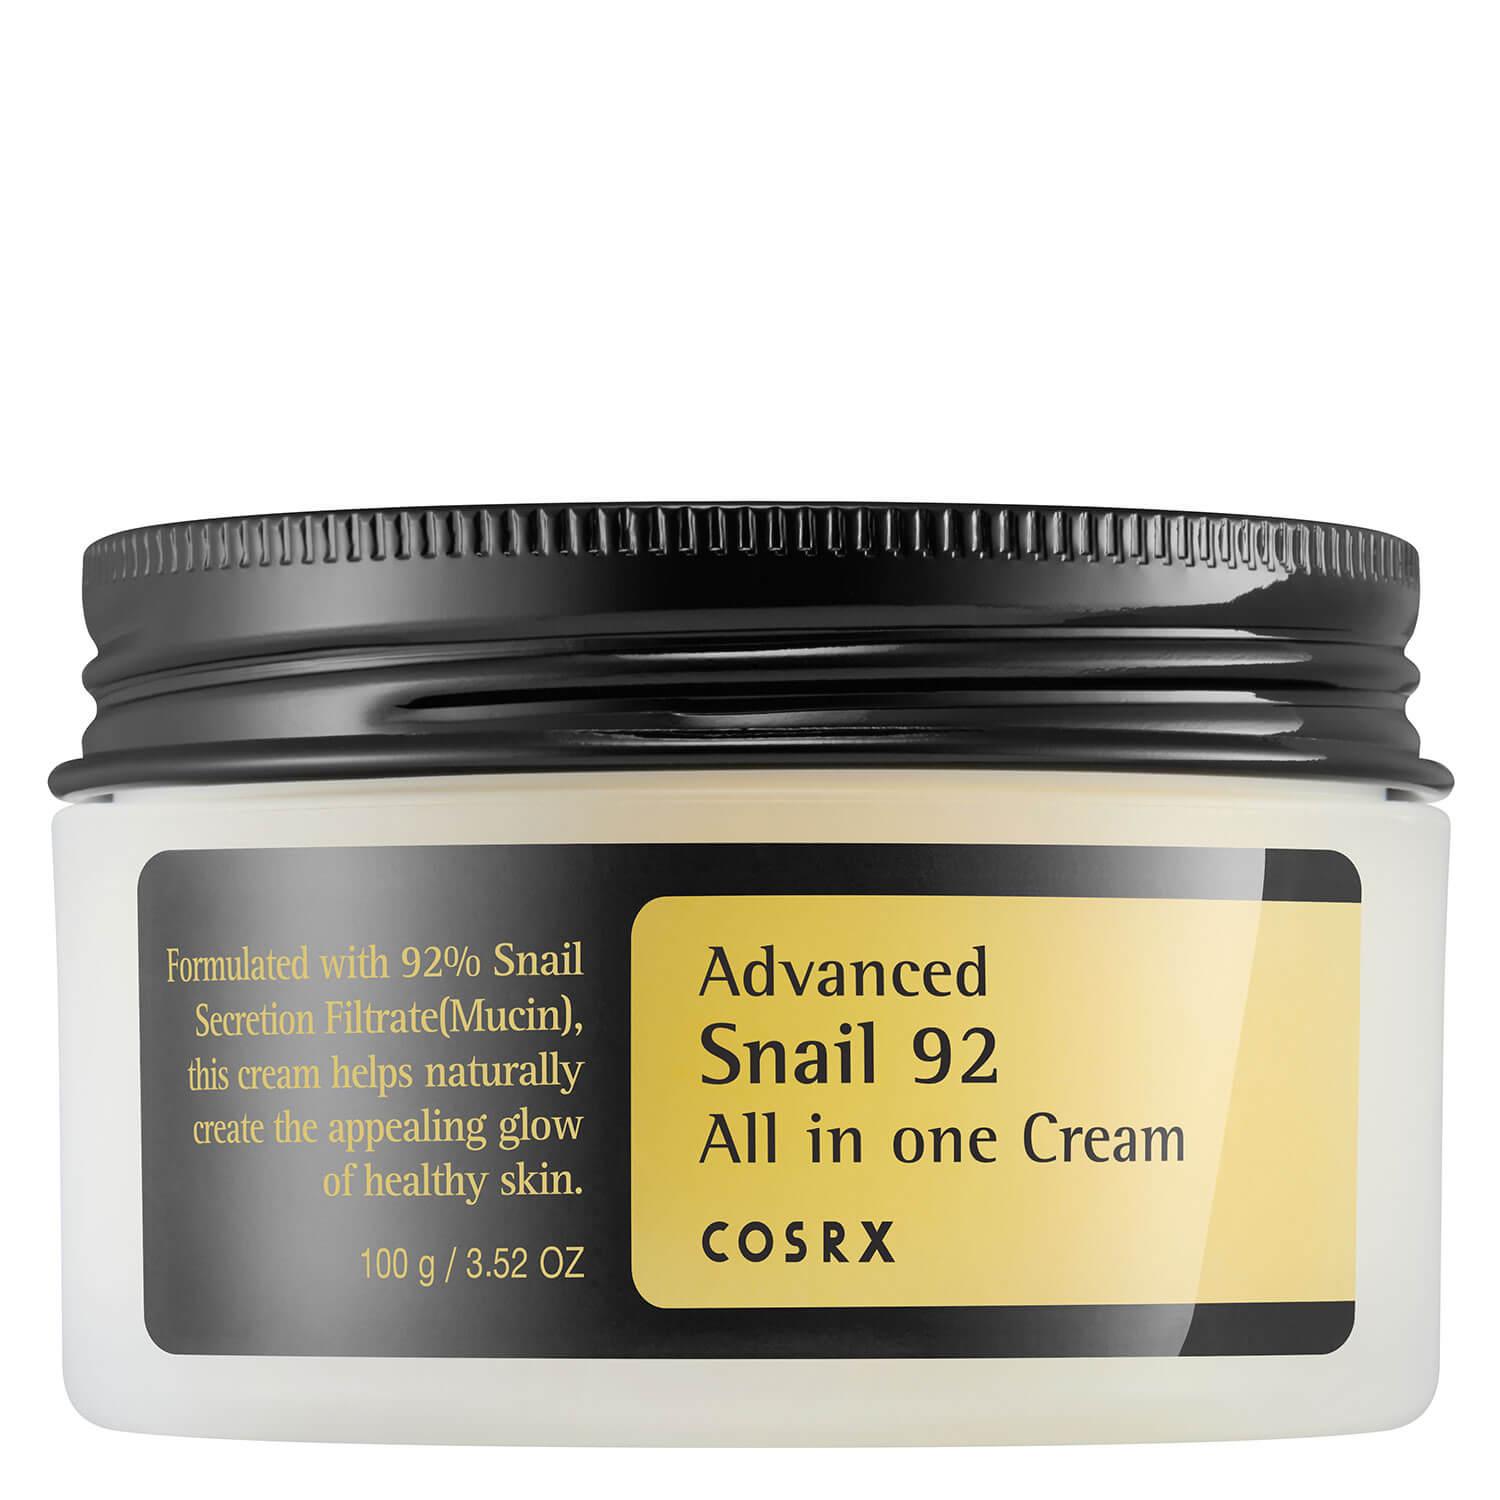 Cosrx - Advanced Snail 92 All in One Cream